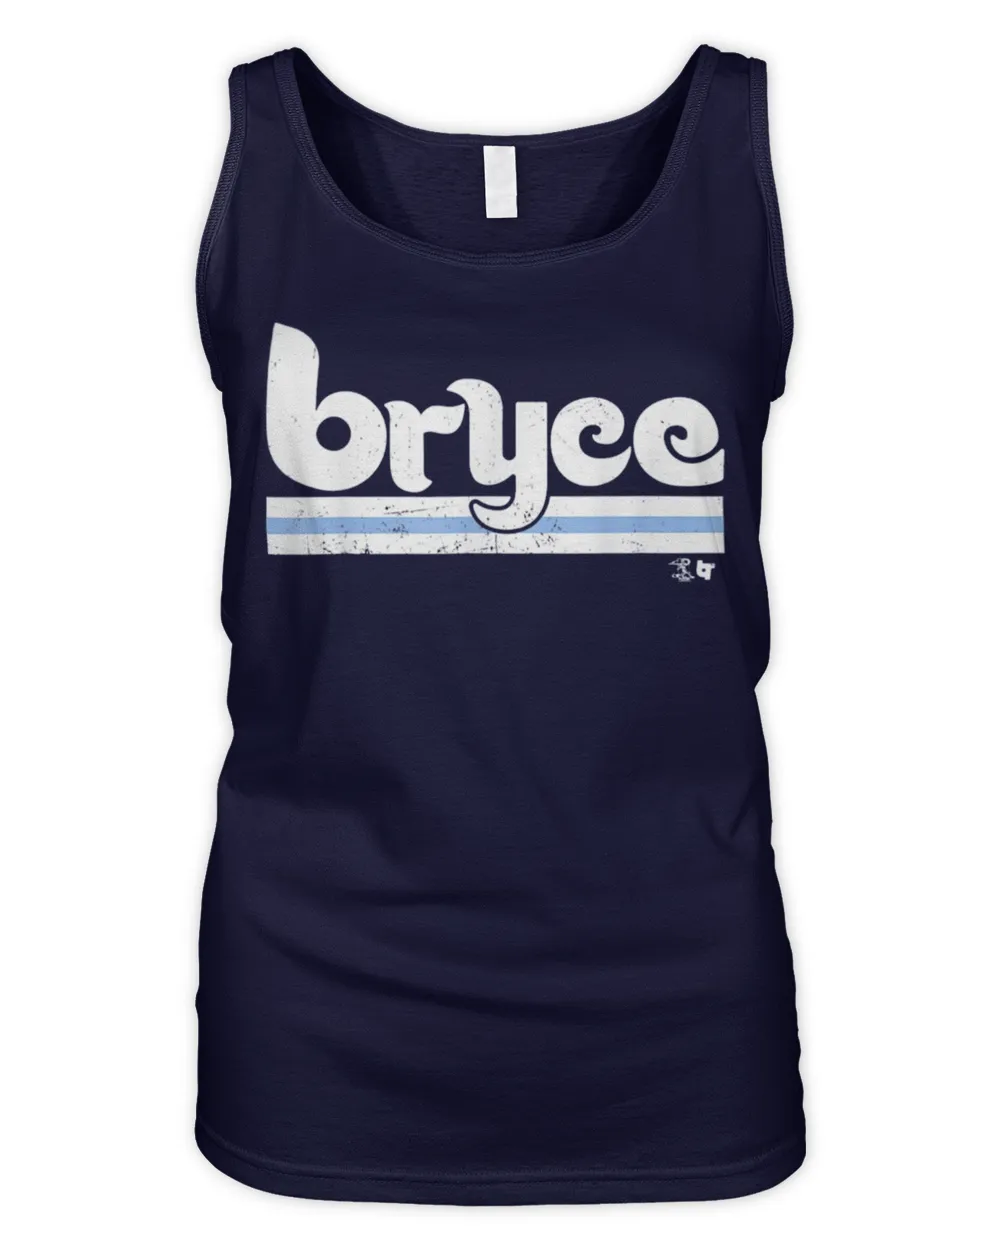 Bryce Philly Bryce Philadelphia Baseball Gift T-Shirt